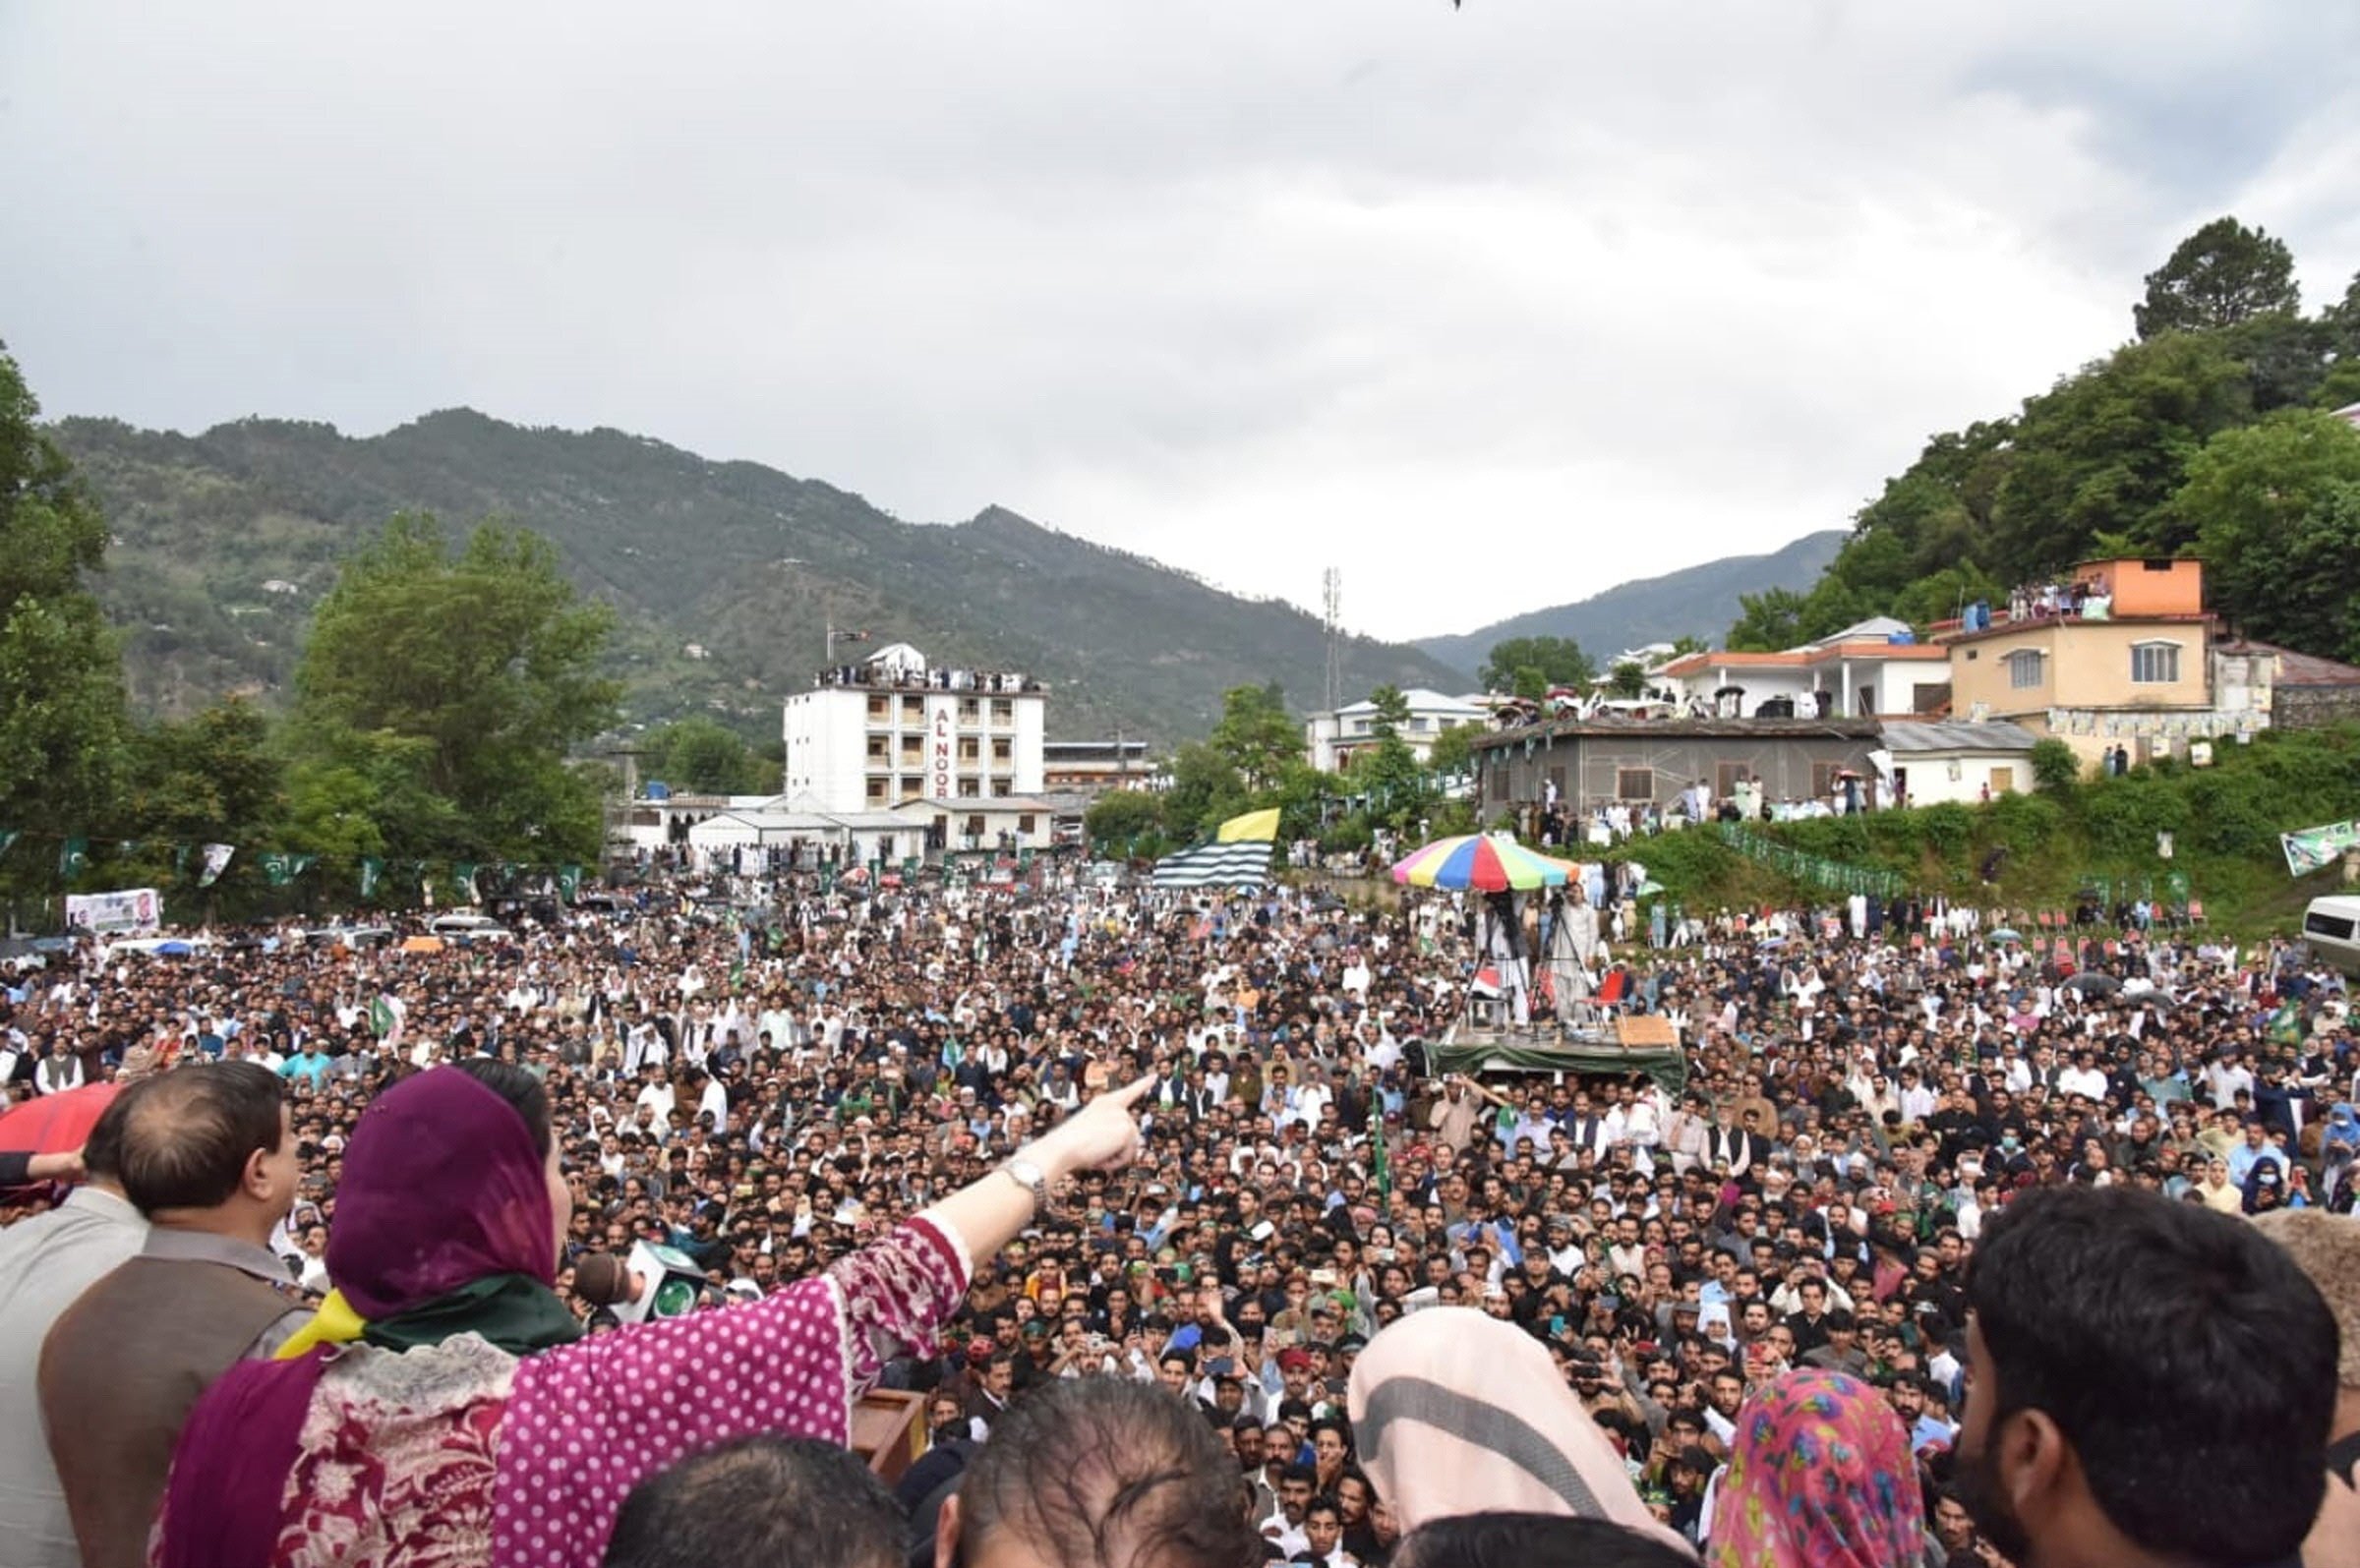 pml n chief organiser maryam nawaz addresses a public gathering in bagh ajk photo online